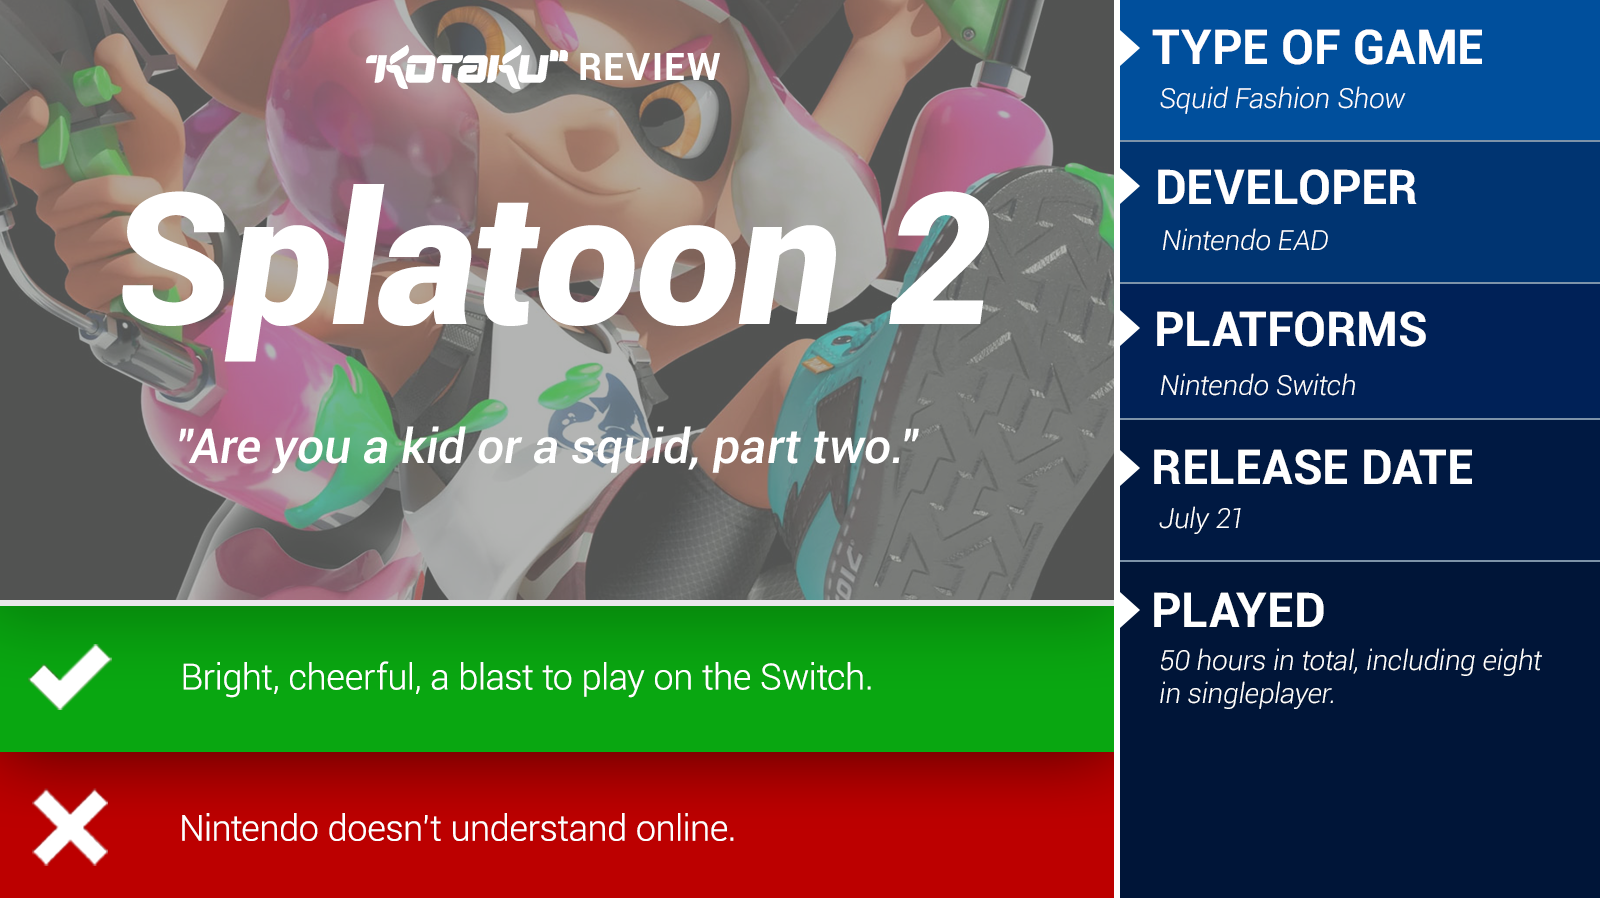 Splatoon 2: The Kotaku Review